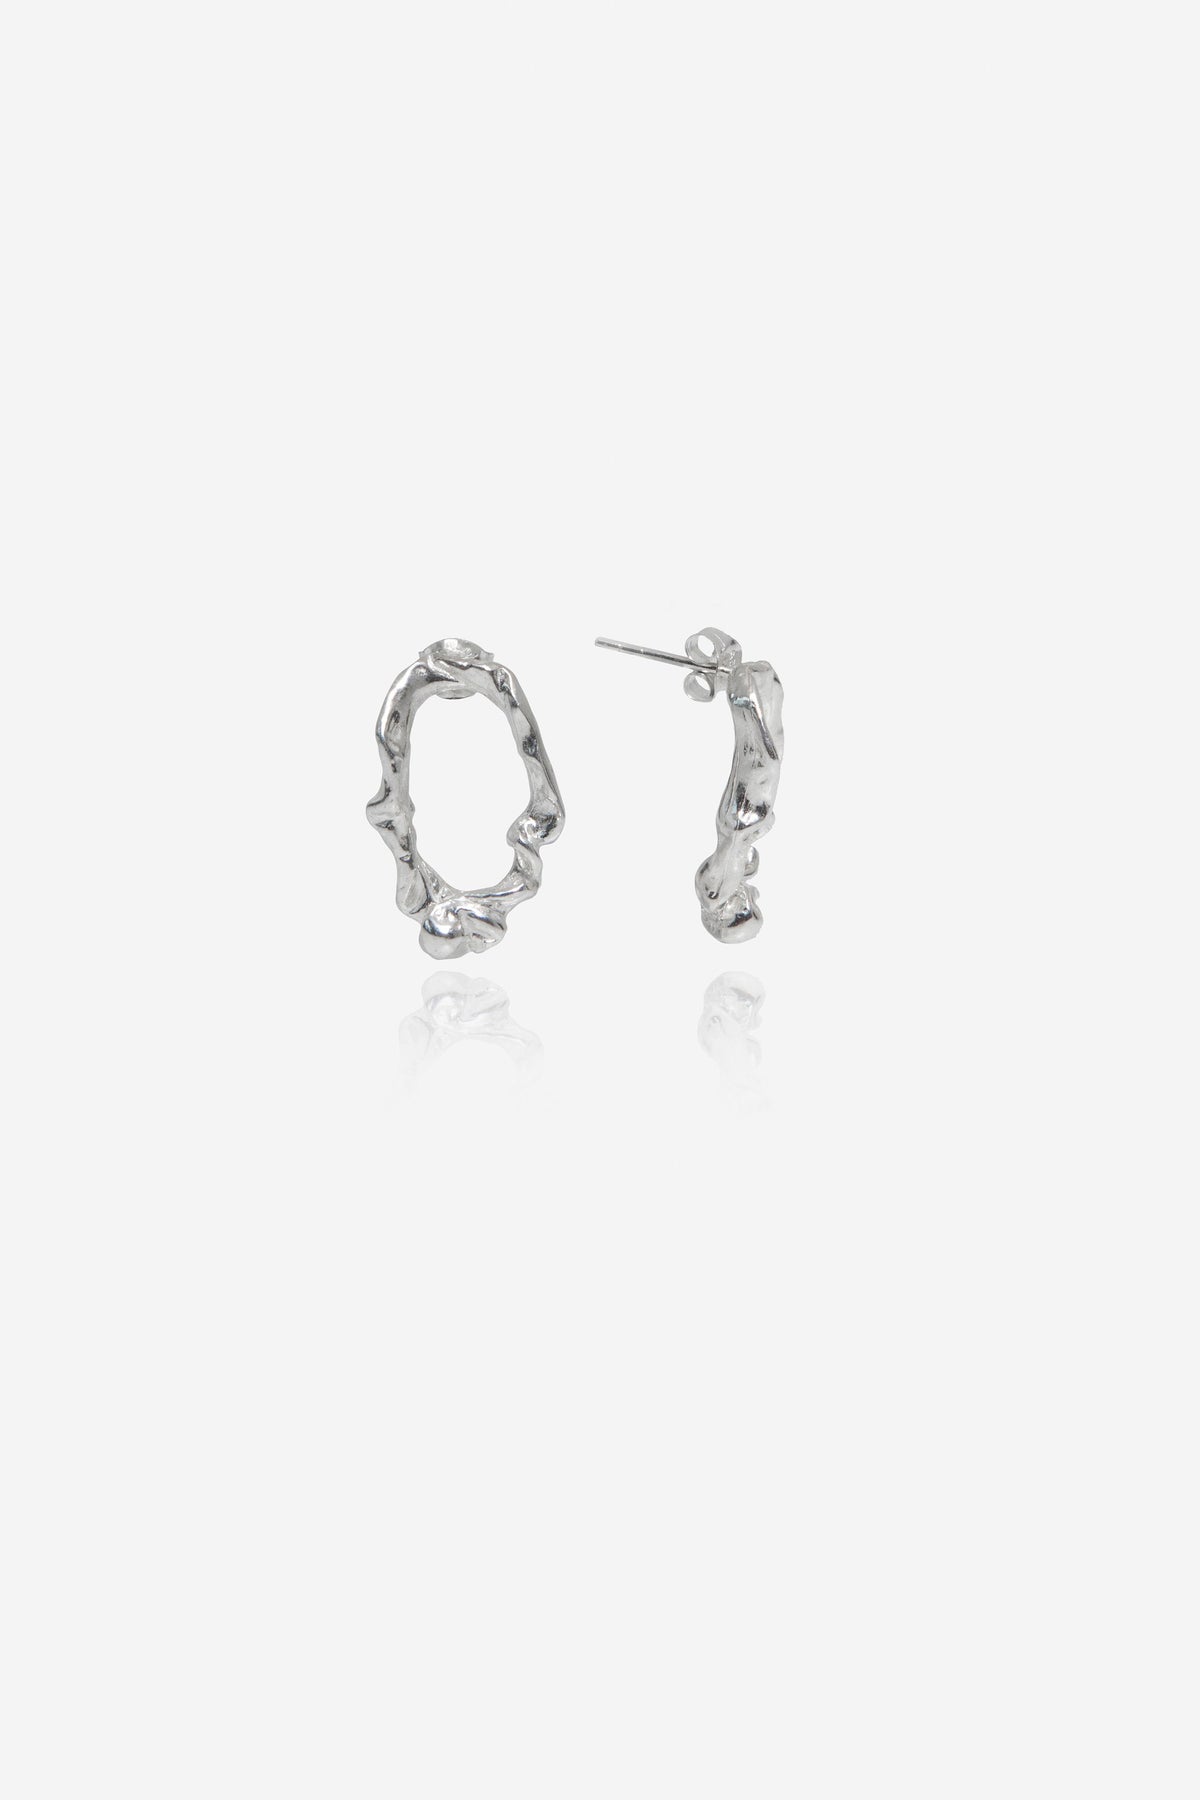 Tilda Fiora Earrings // Silver